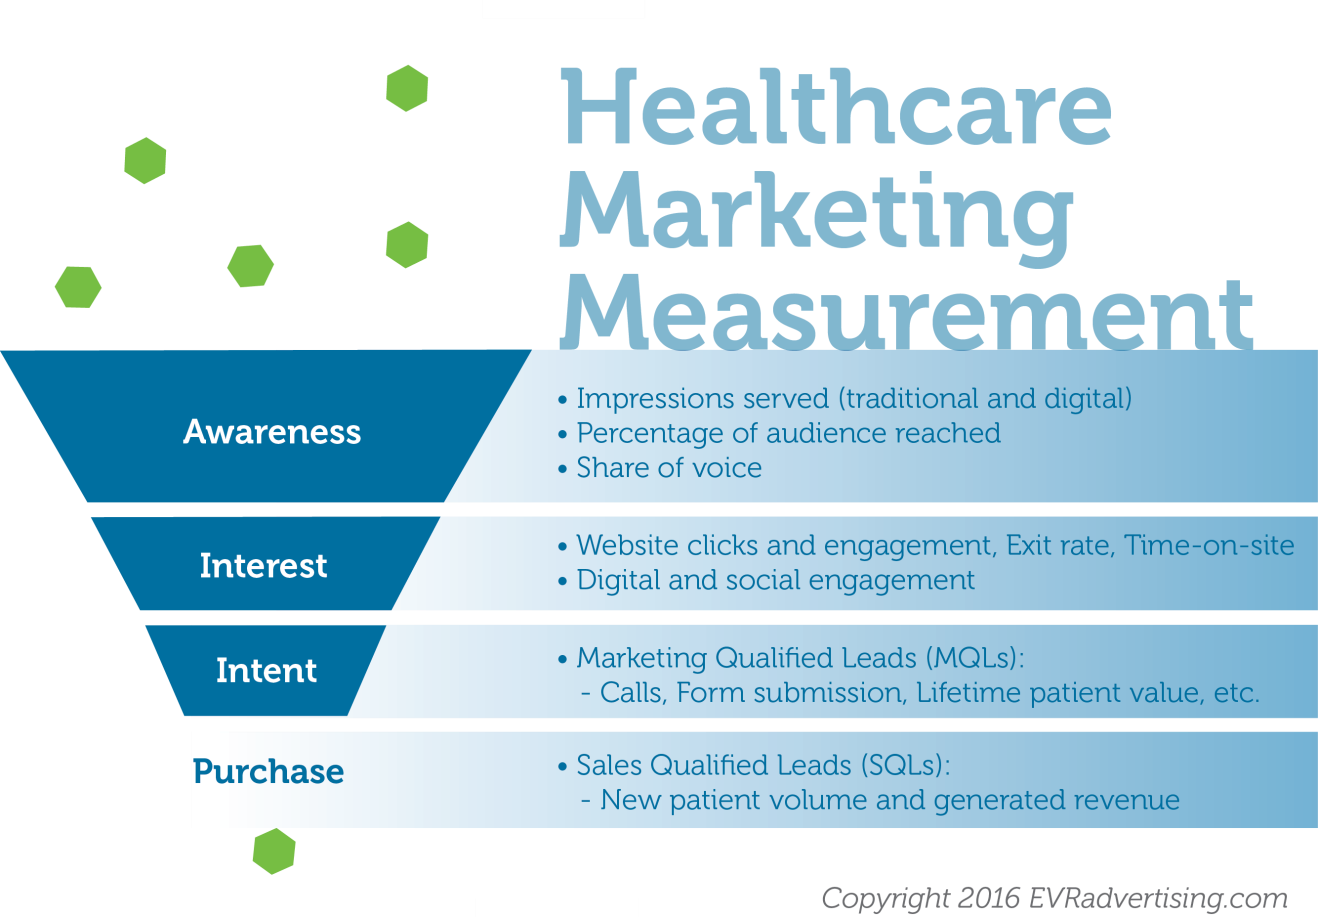 heaolthcare marketing measurments